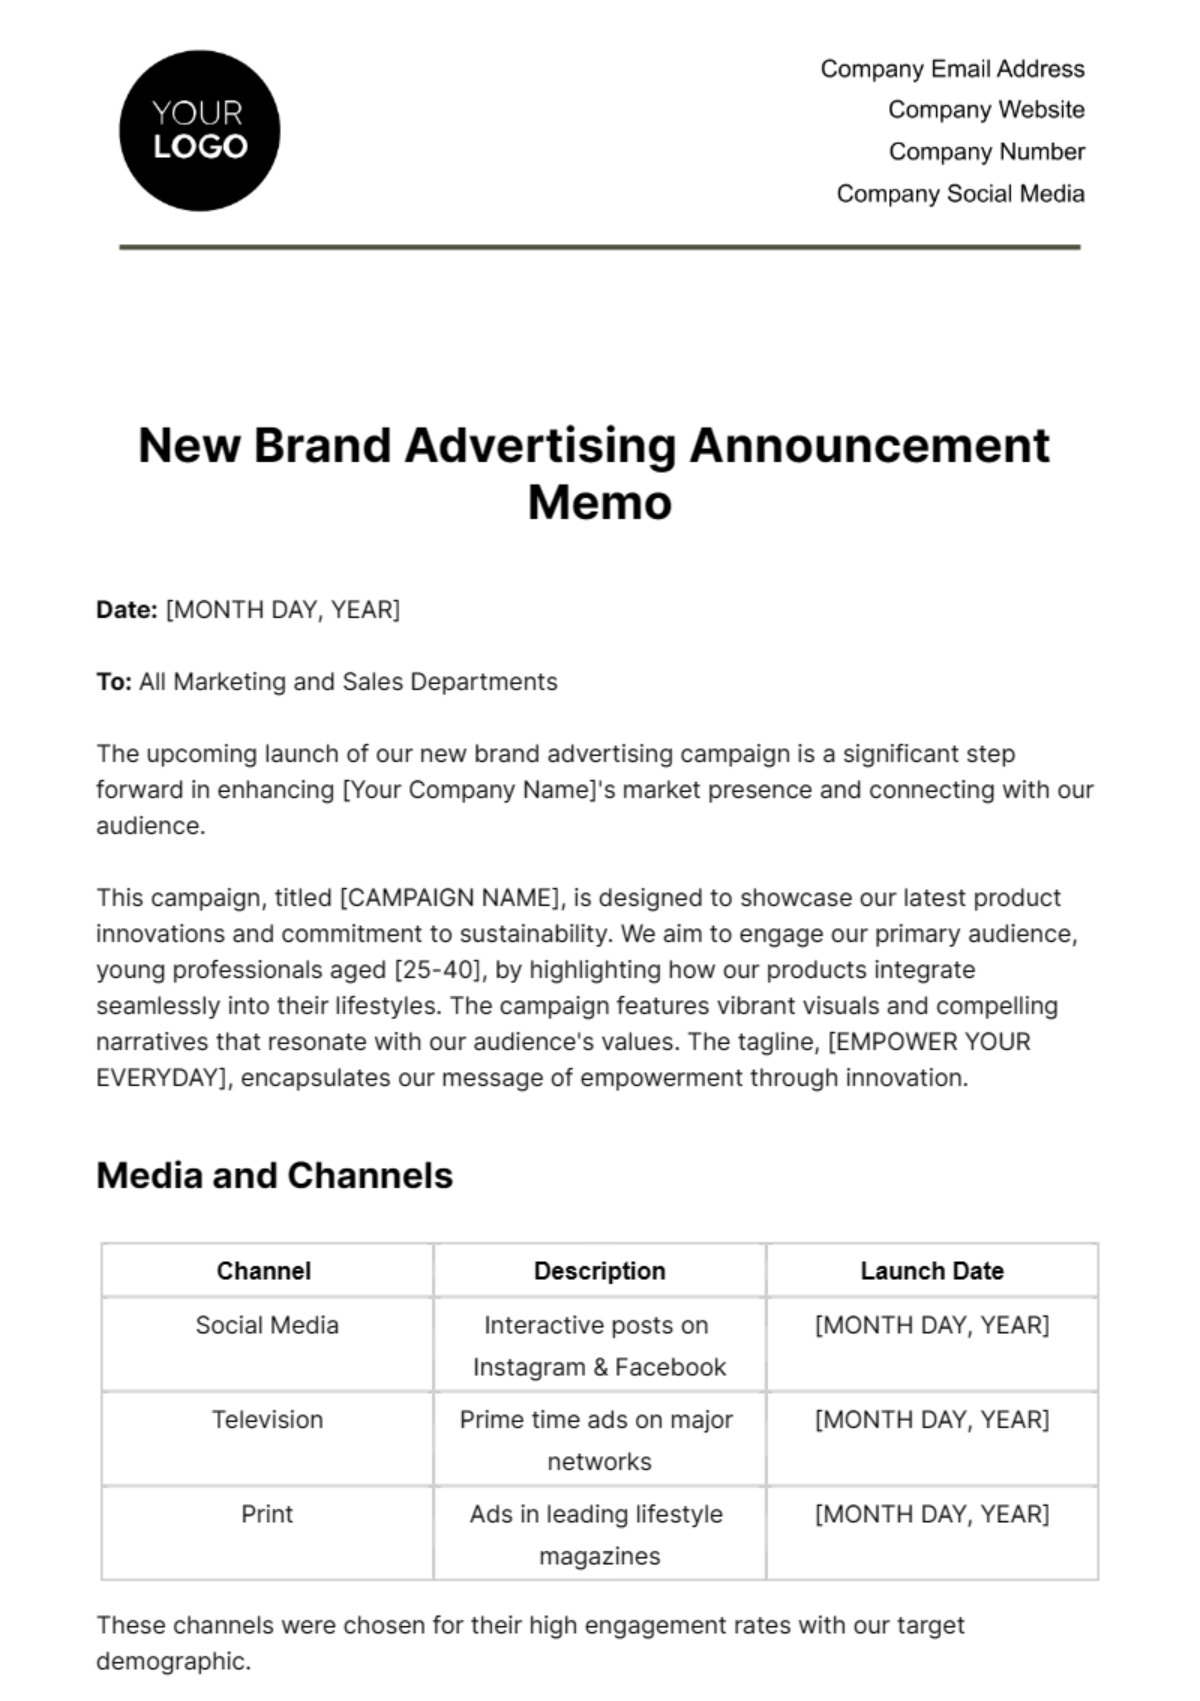 New Brand Advertising Announcement Memo Template